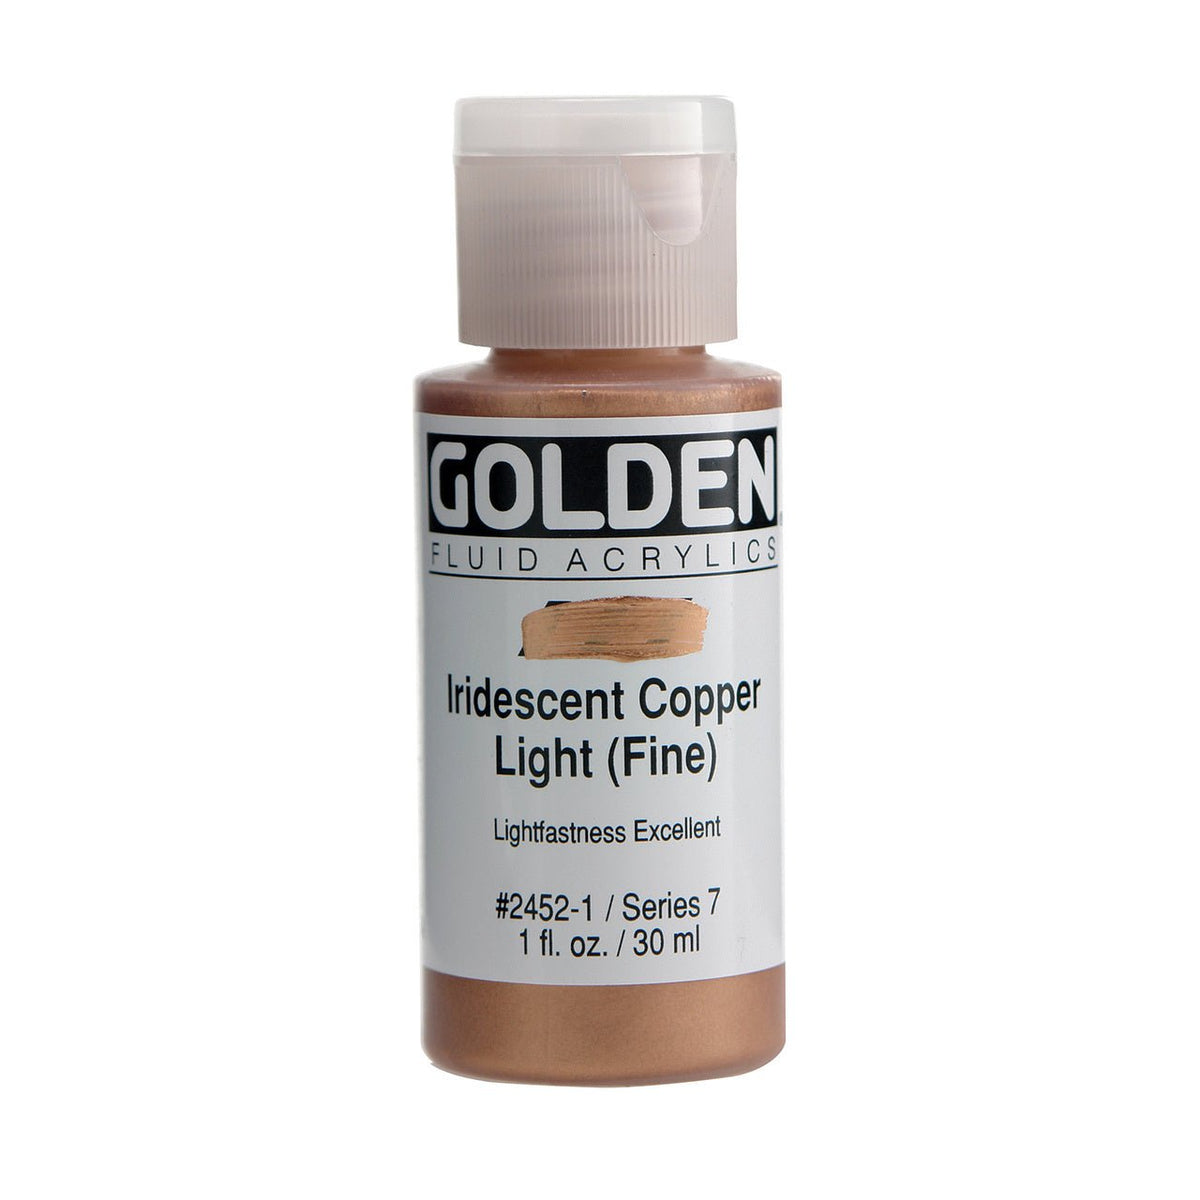 Golden Fluid Acrylic Iridescent Copper Light (fine) 1 oz - merriartist.com